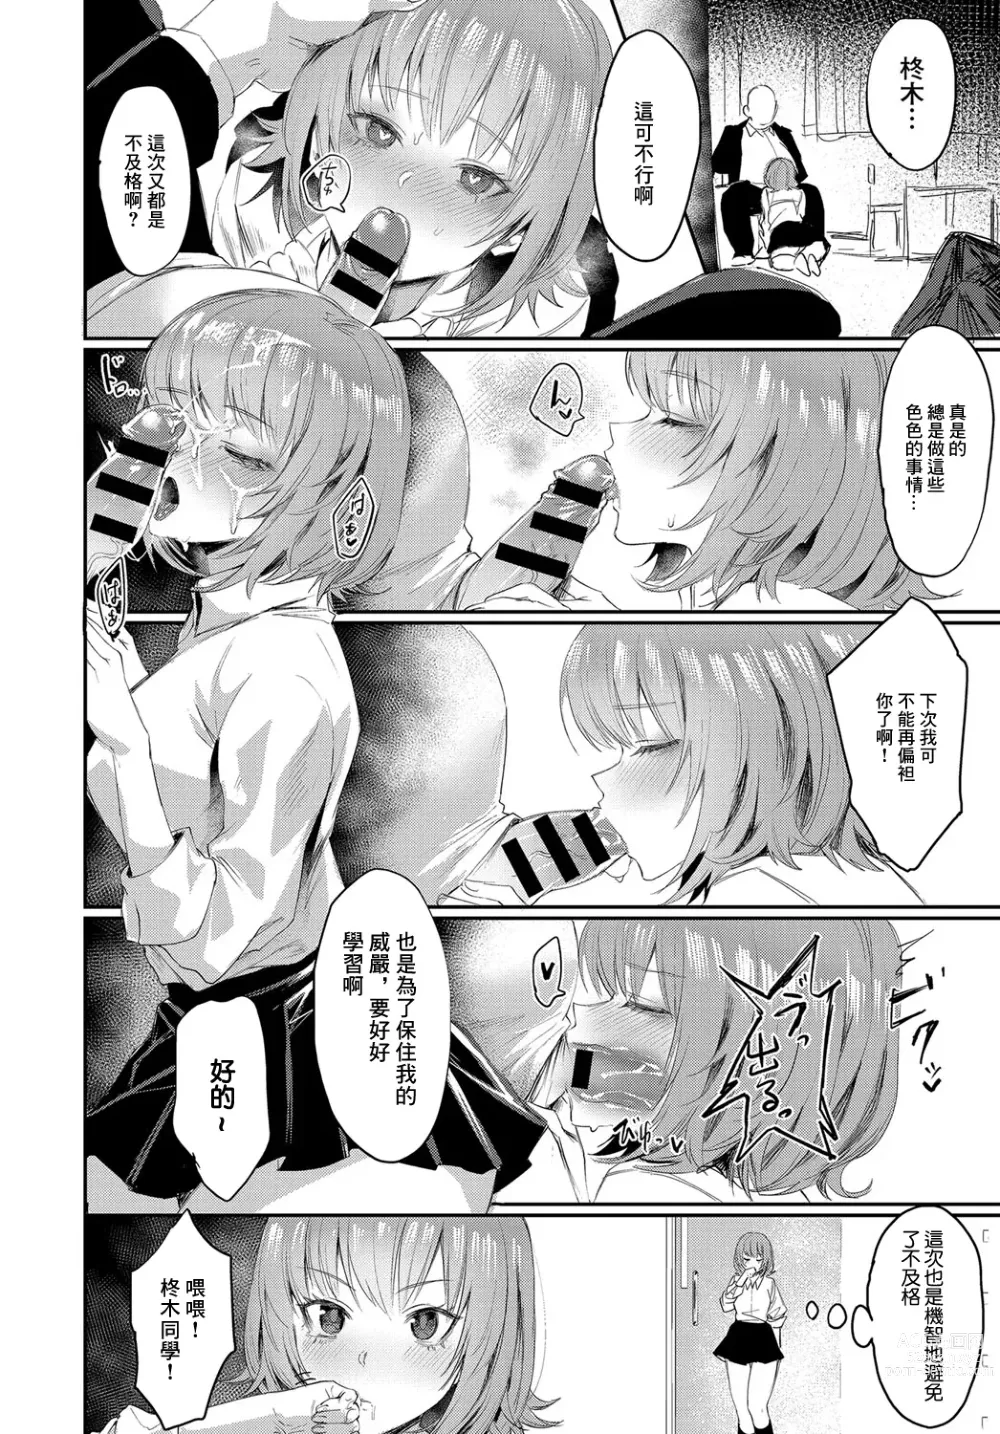 Page 6 of manga Momoko no teikoku - The Empire Of Momoko